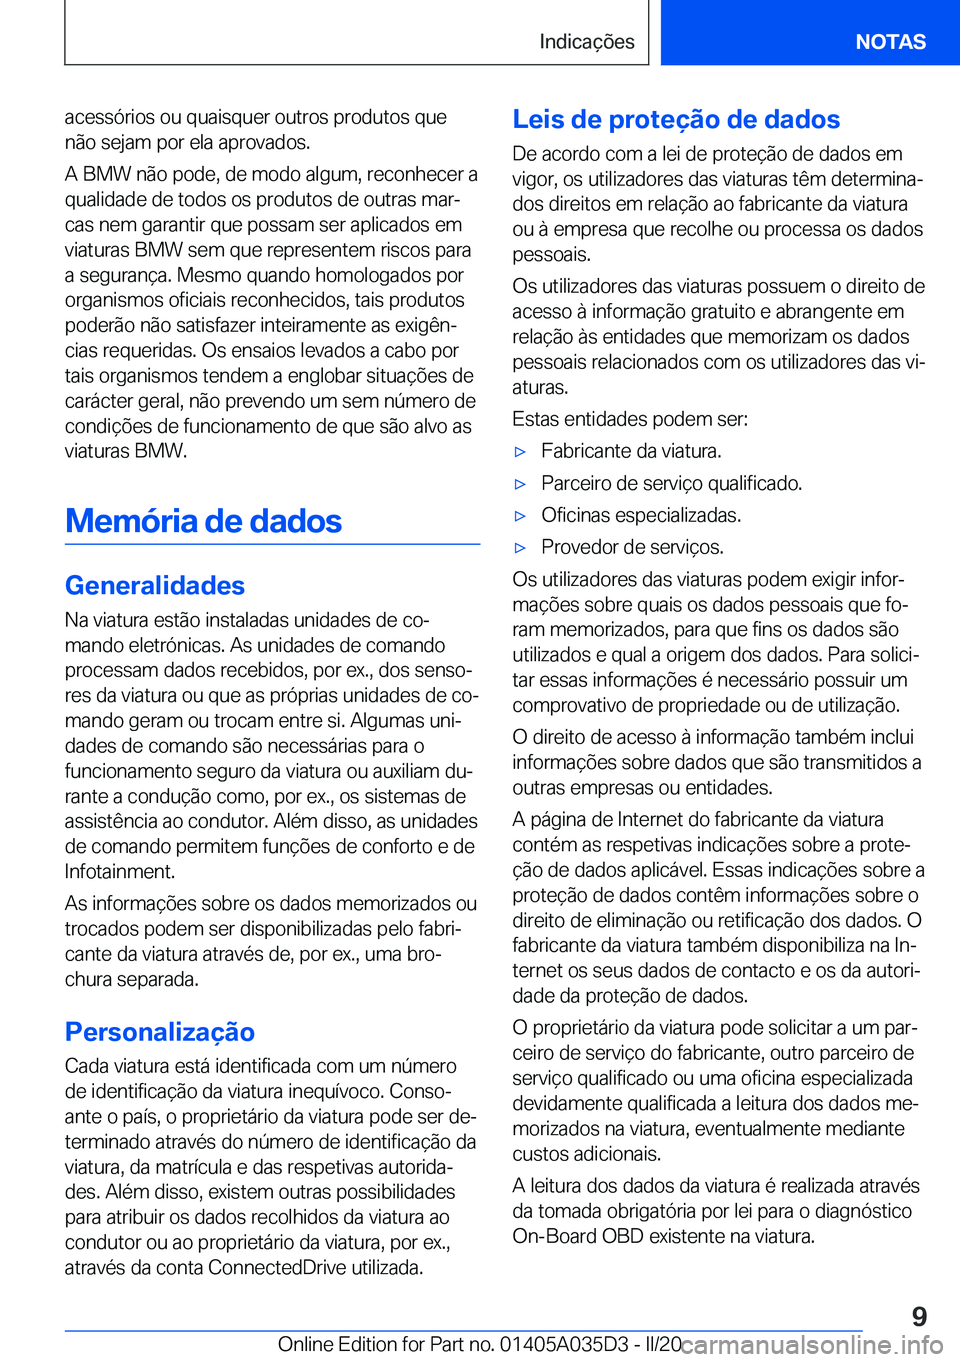 BMW X4 2020  Manual do condutor (in Portuguese) �a�c�e�s�s�ó�r�i�o�s��o�u��q�u�a�i�s�q�u�e�r��o�u�t�r�o�s��p�r�o�d�u�t�o�s��q�u�e
�n�ã�o��s�e�j�a�m��p�o�r��e�l�a��a�p�r�o�v�a�d�o�s�.
�A��B�M�W��n�ã�o��p�o�d�e�,��d�e��m�o�d�o��a�l�